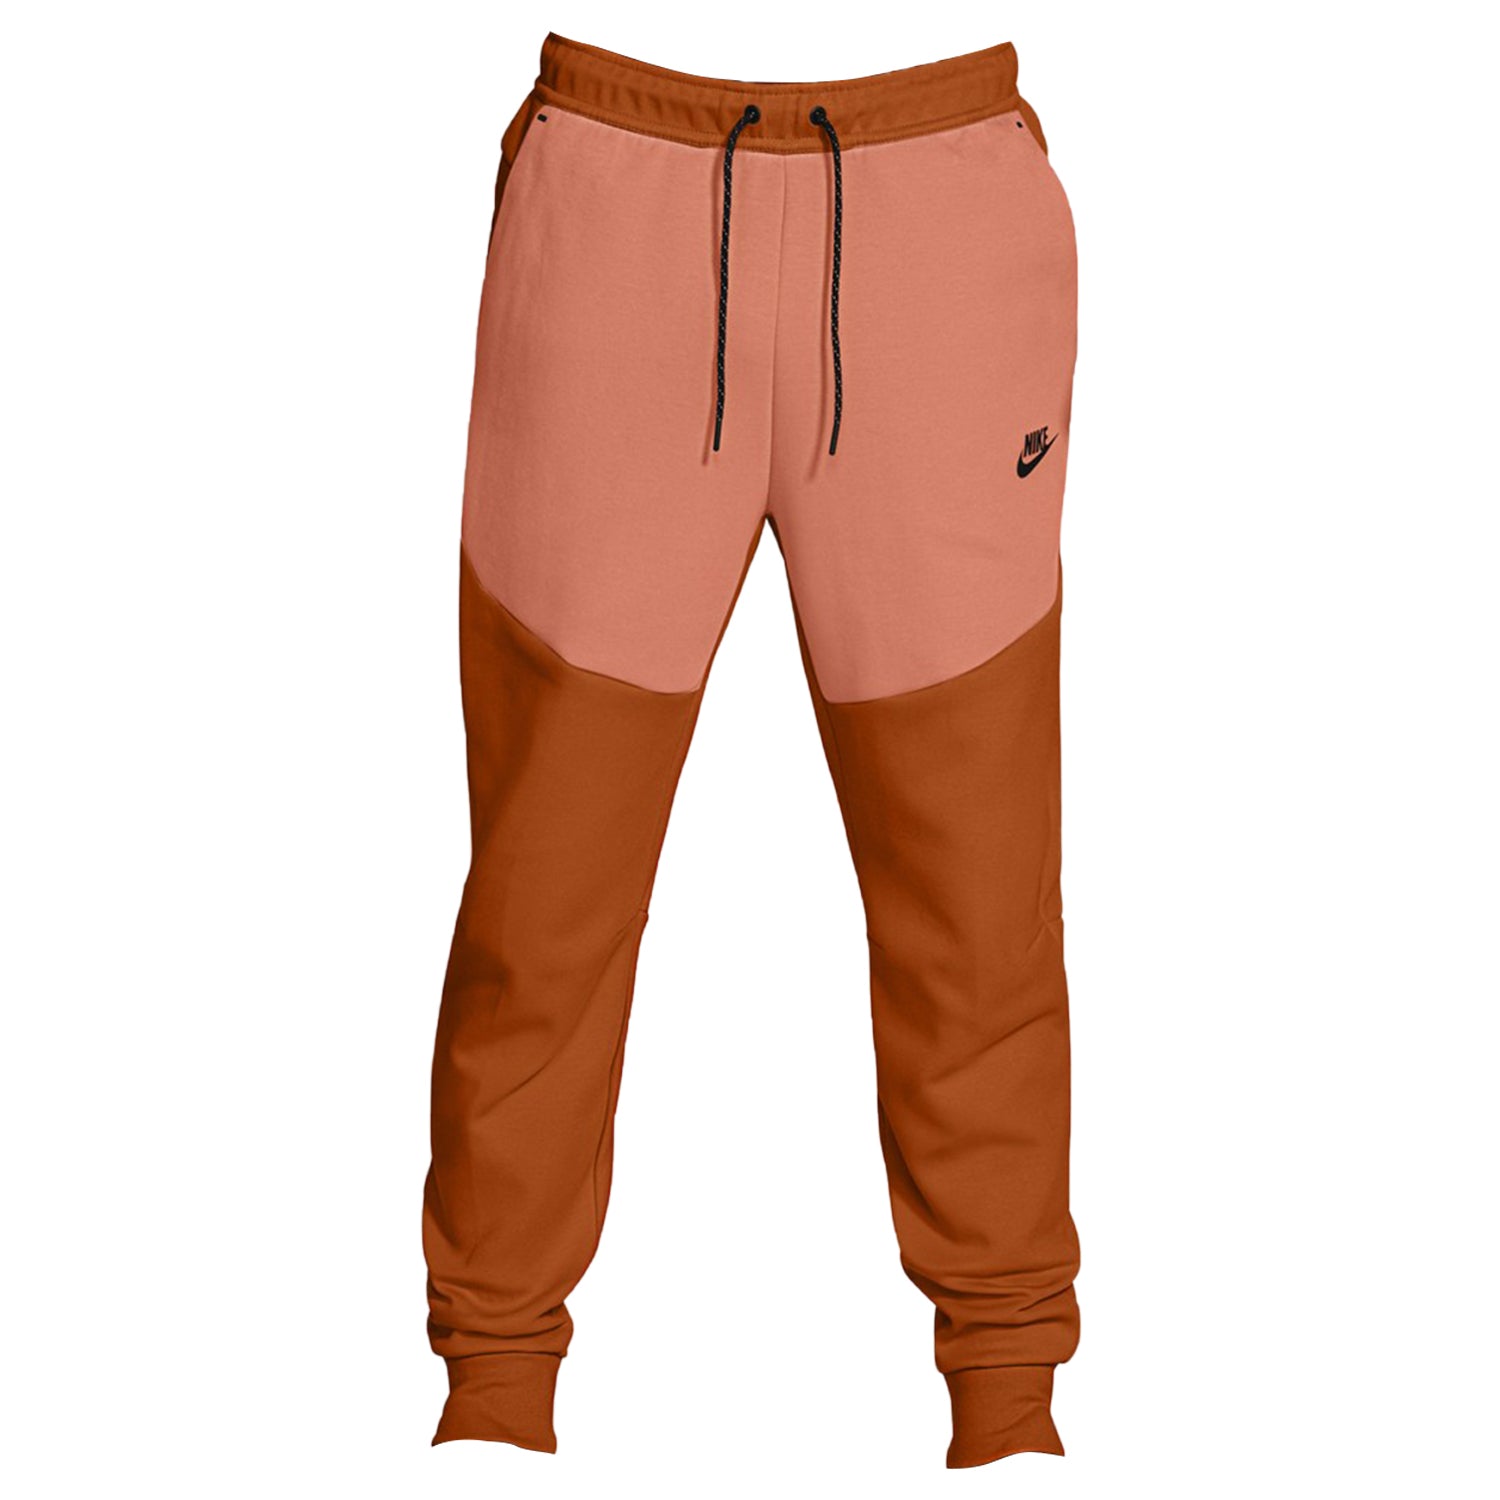 Orange Sportswear Pants - Tent Nike Campfire NY Tech Sale Jogger Fleece Black